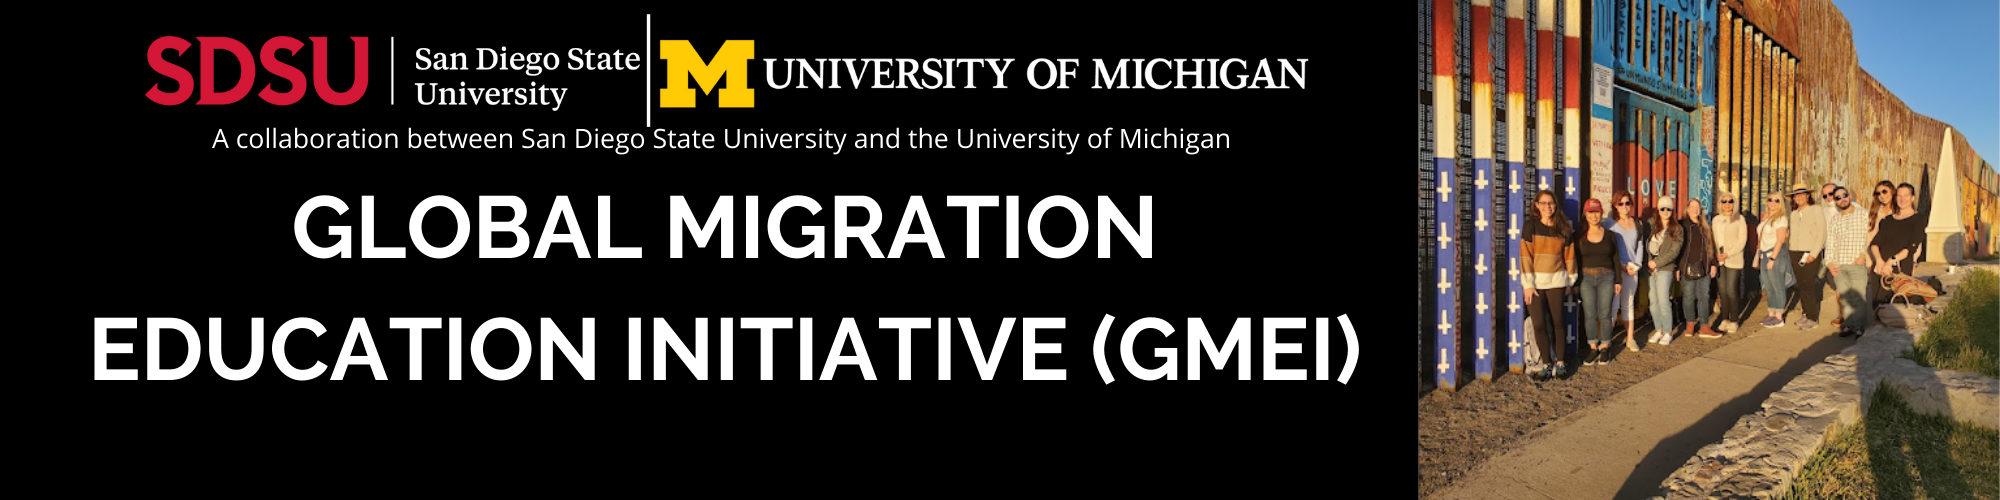 Global Migration Education Initiative Banner